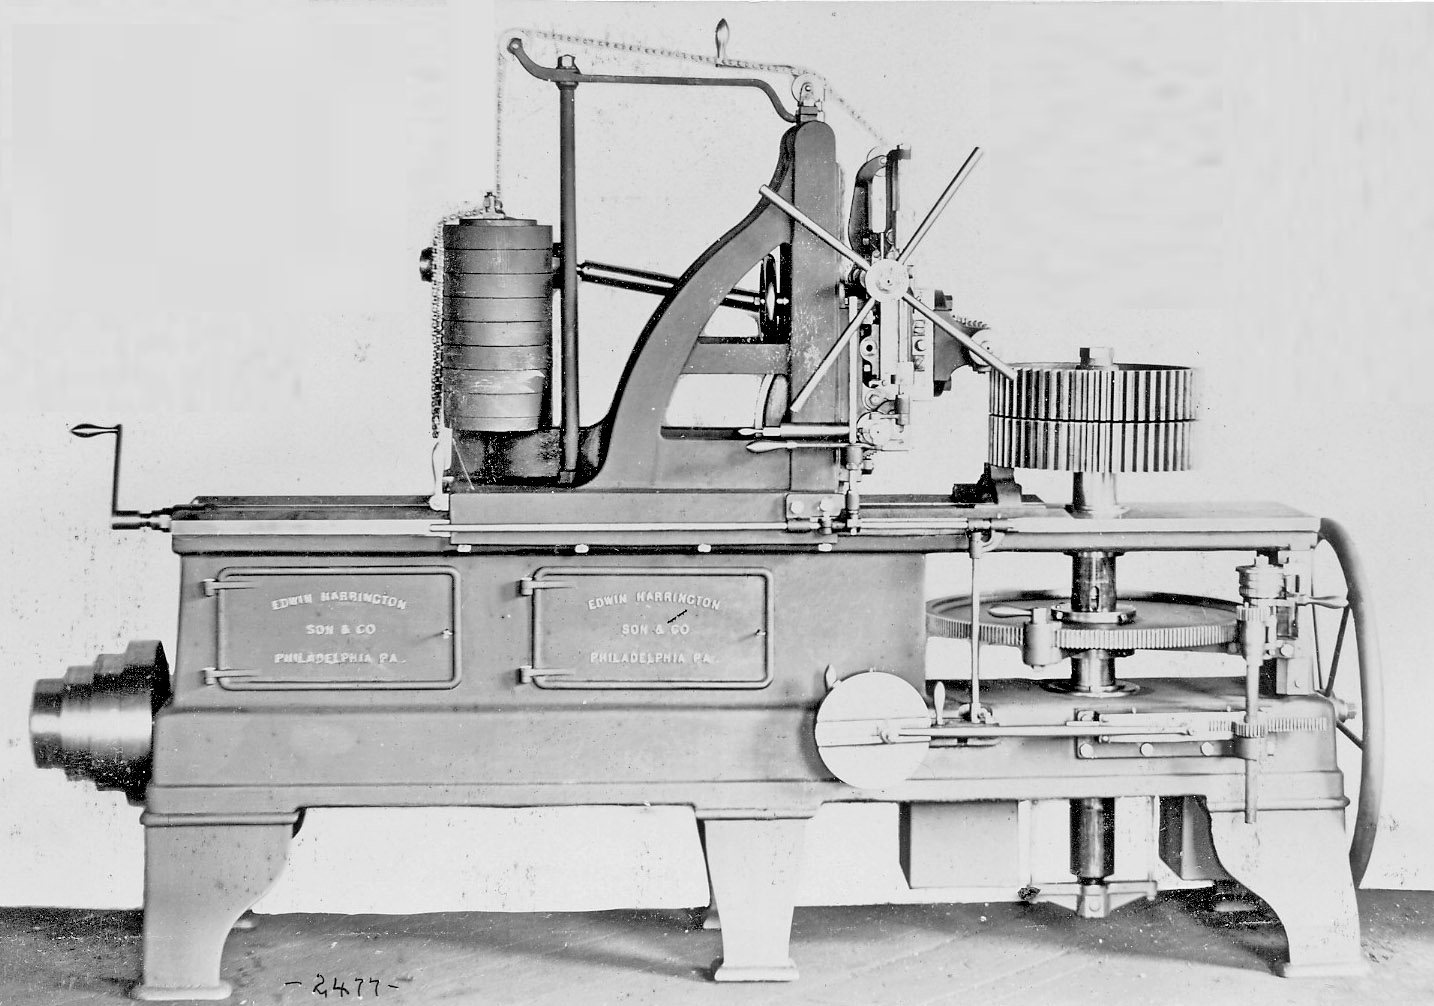 Edwin Harrington Gear Cutting Machine, pages 105-107